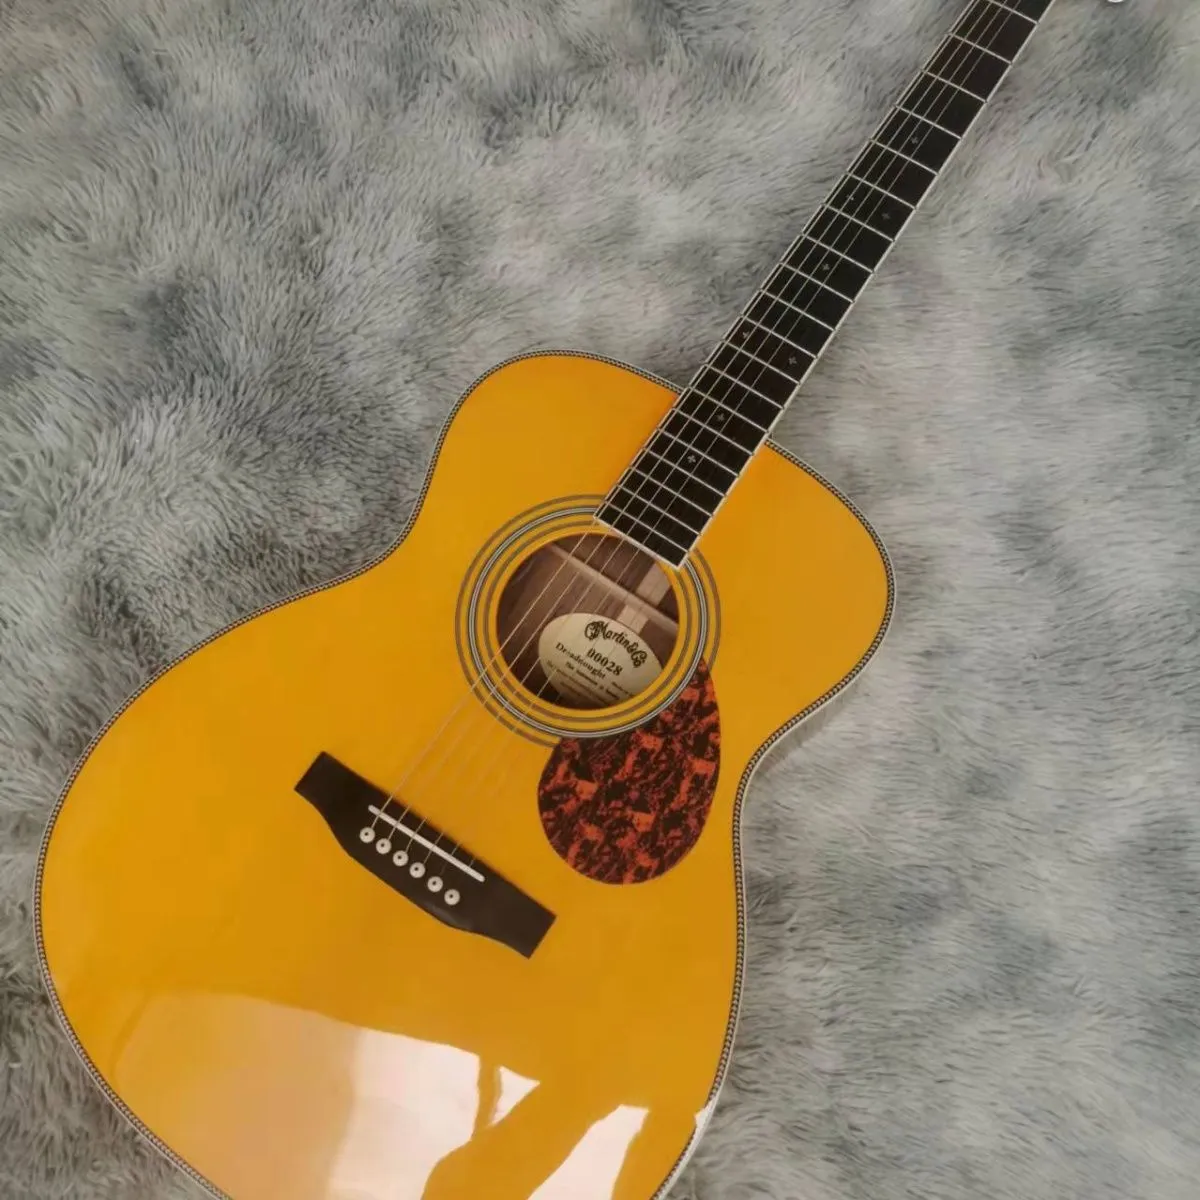 om Series face yellow 40 "ballad finger playing guitar electric wood guitar plus pickup Fisherman 301